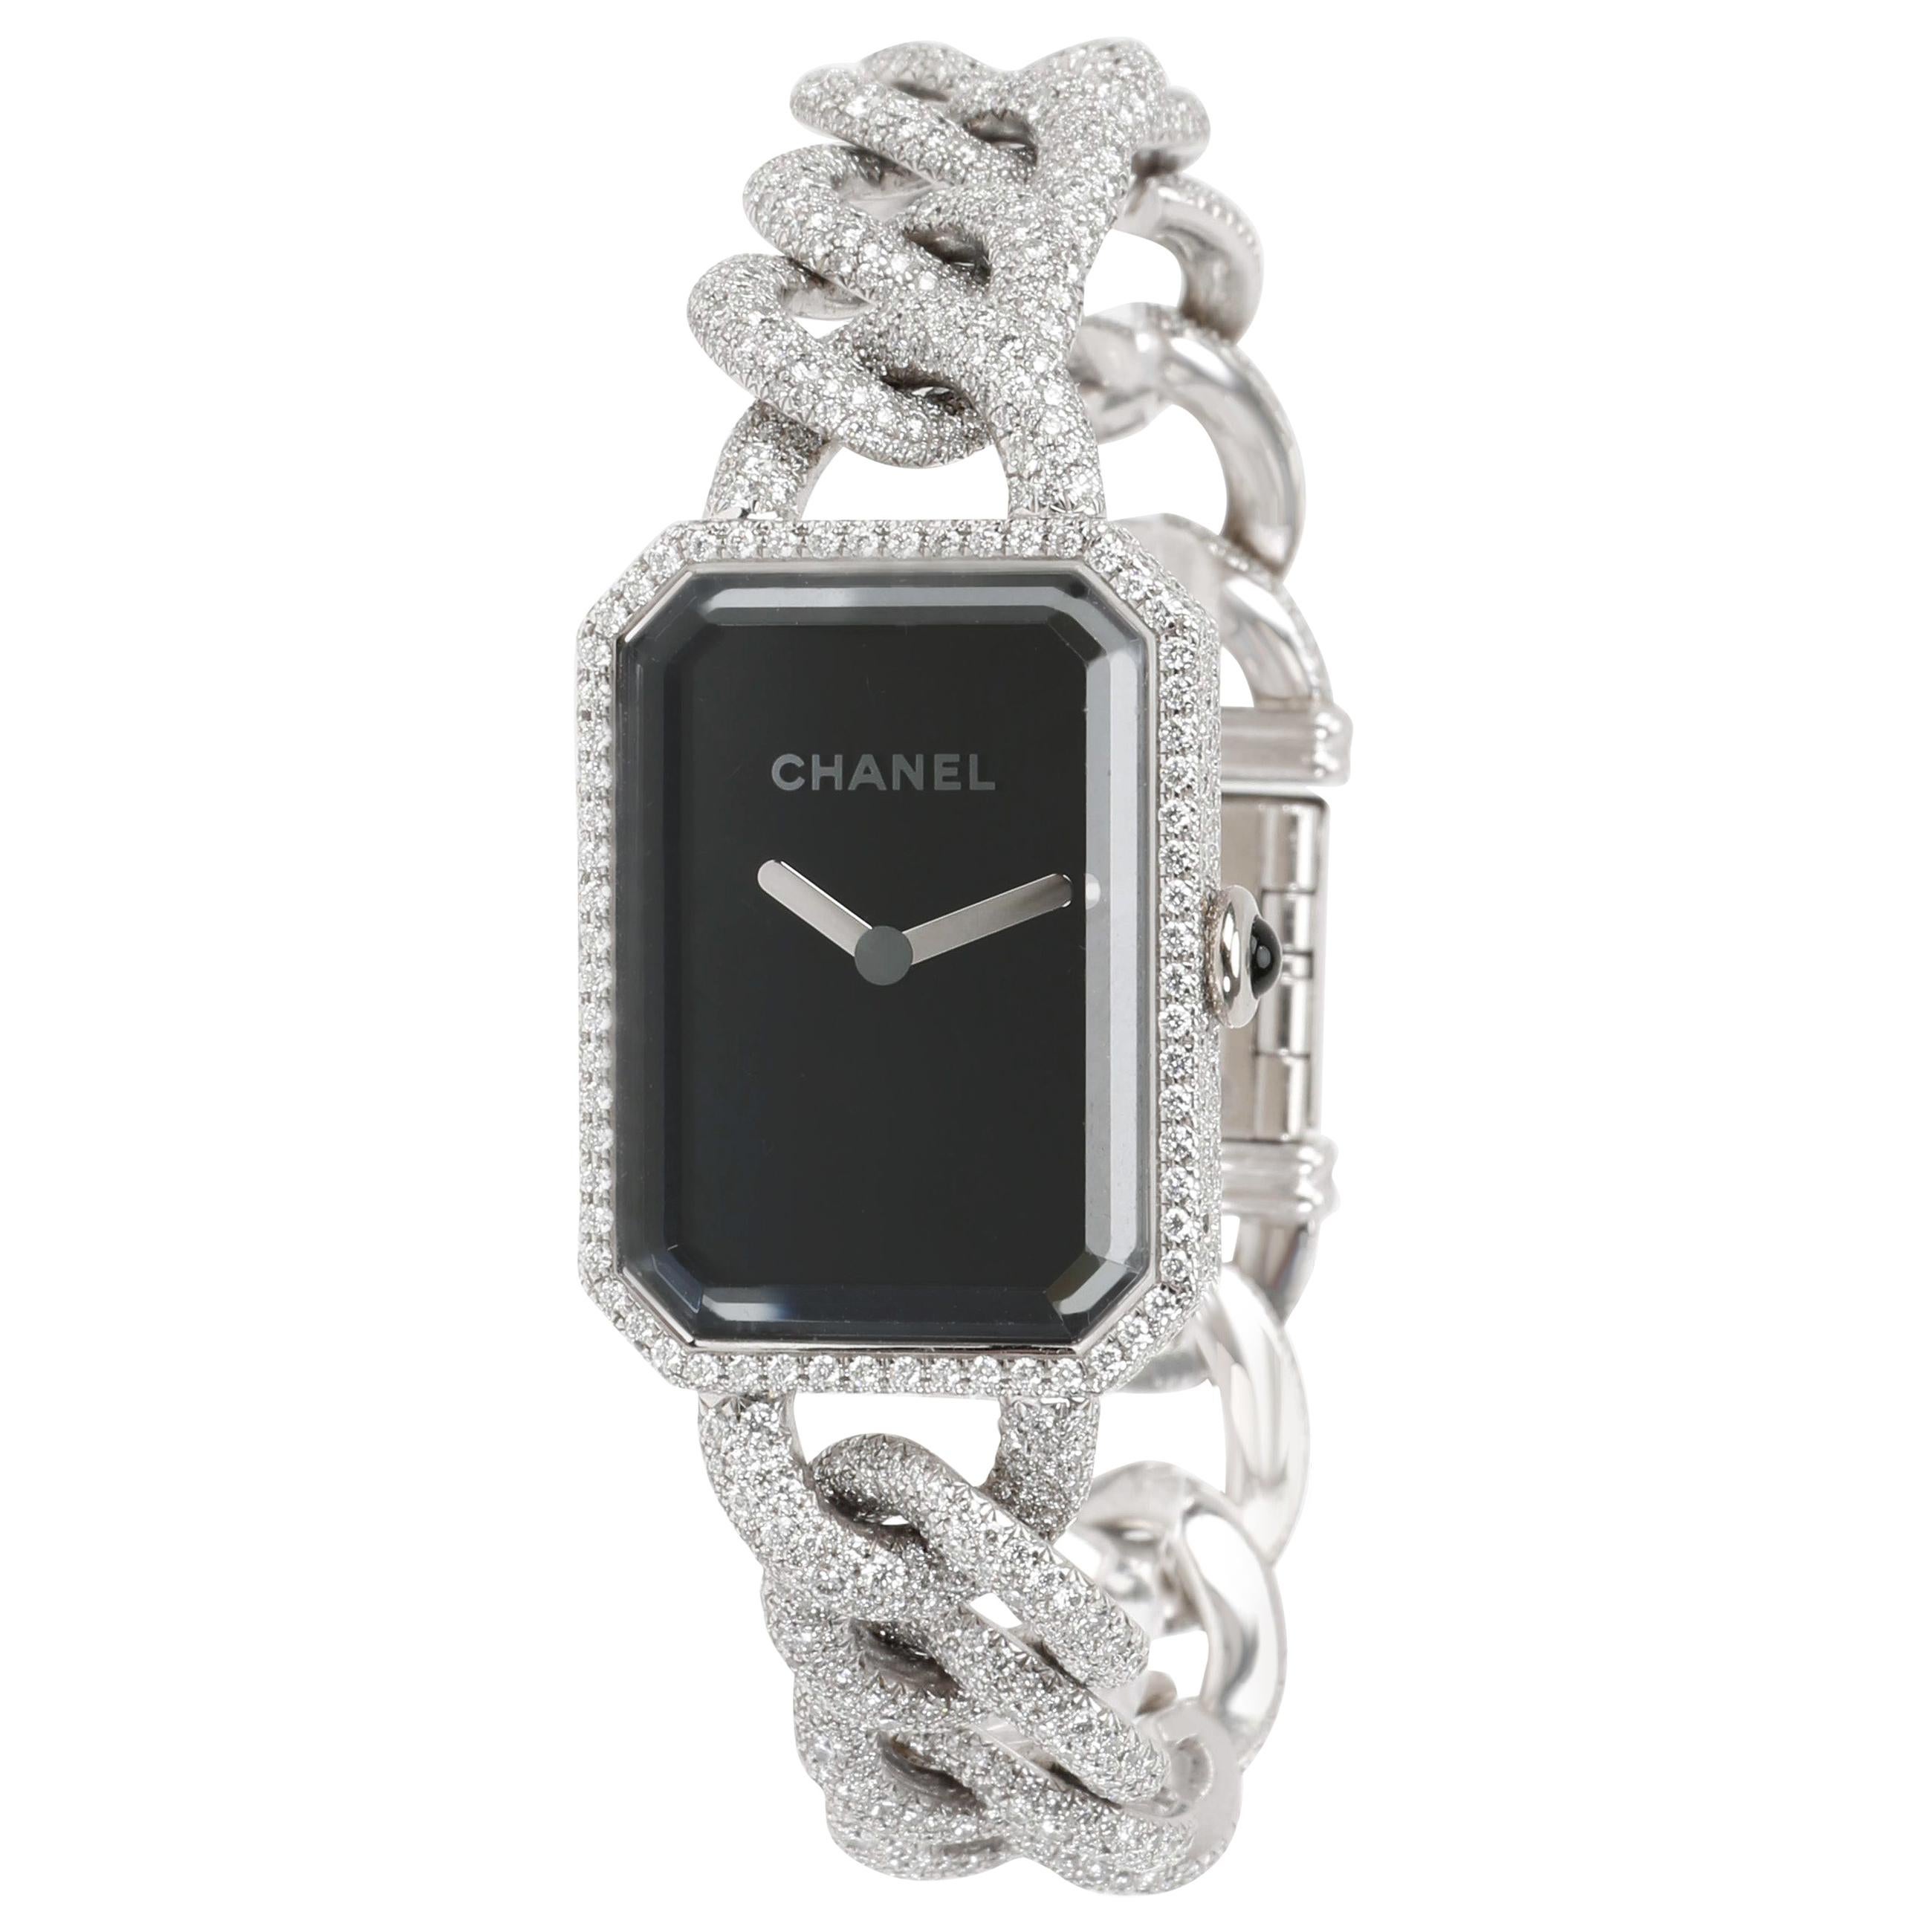 Chanel Premiere H3260 Women's Diamond Watch in 18 Karat White Gold